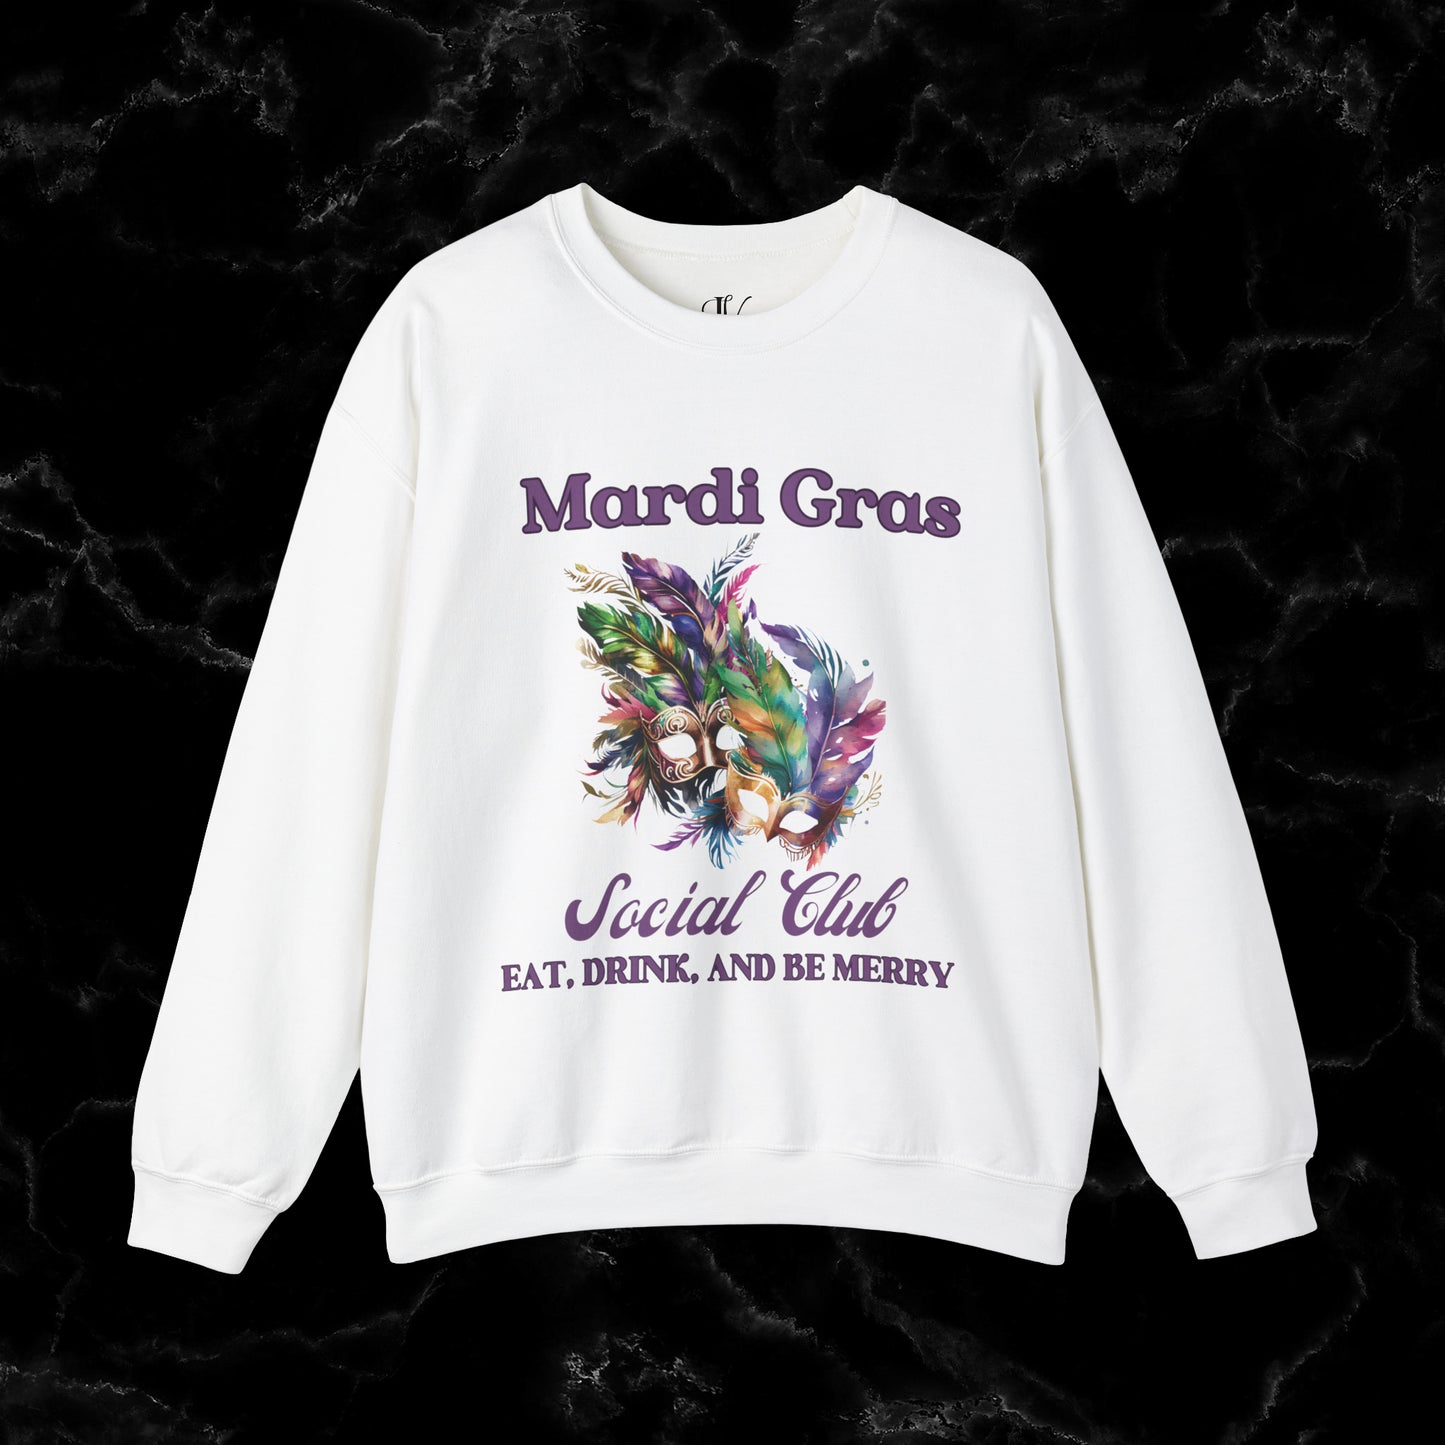 Mardi Gras Sweatshirt Women - NOLA Luxury Bachelorette Sweater, Unique Fat Tuesday Shirt, Louisiana Girls Trip Sweater, Mardi Gras Social Club Chic Sweatshirt S White 